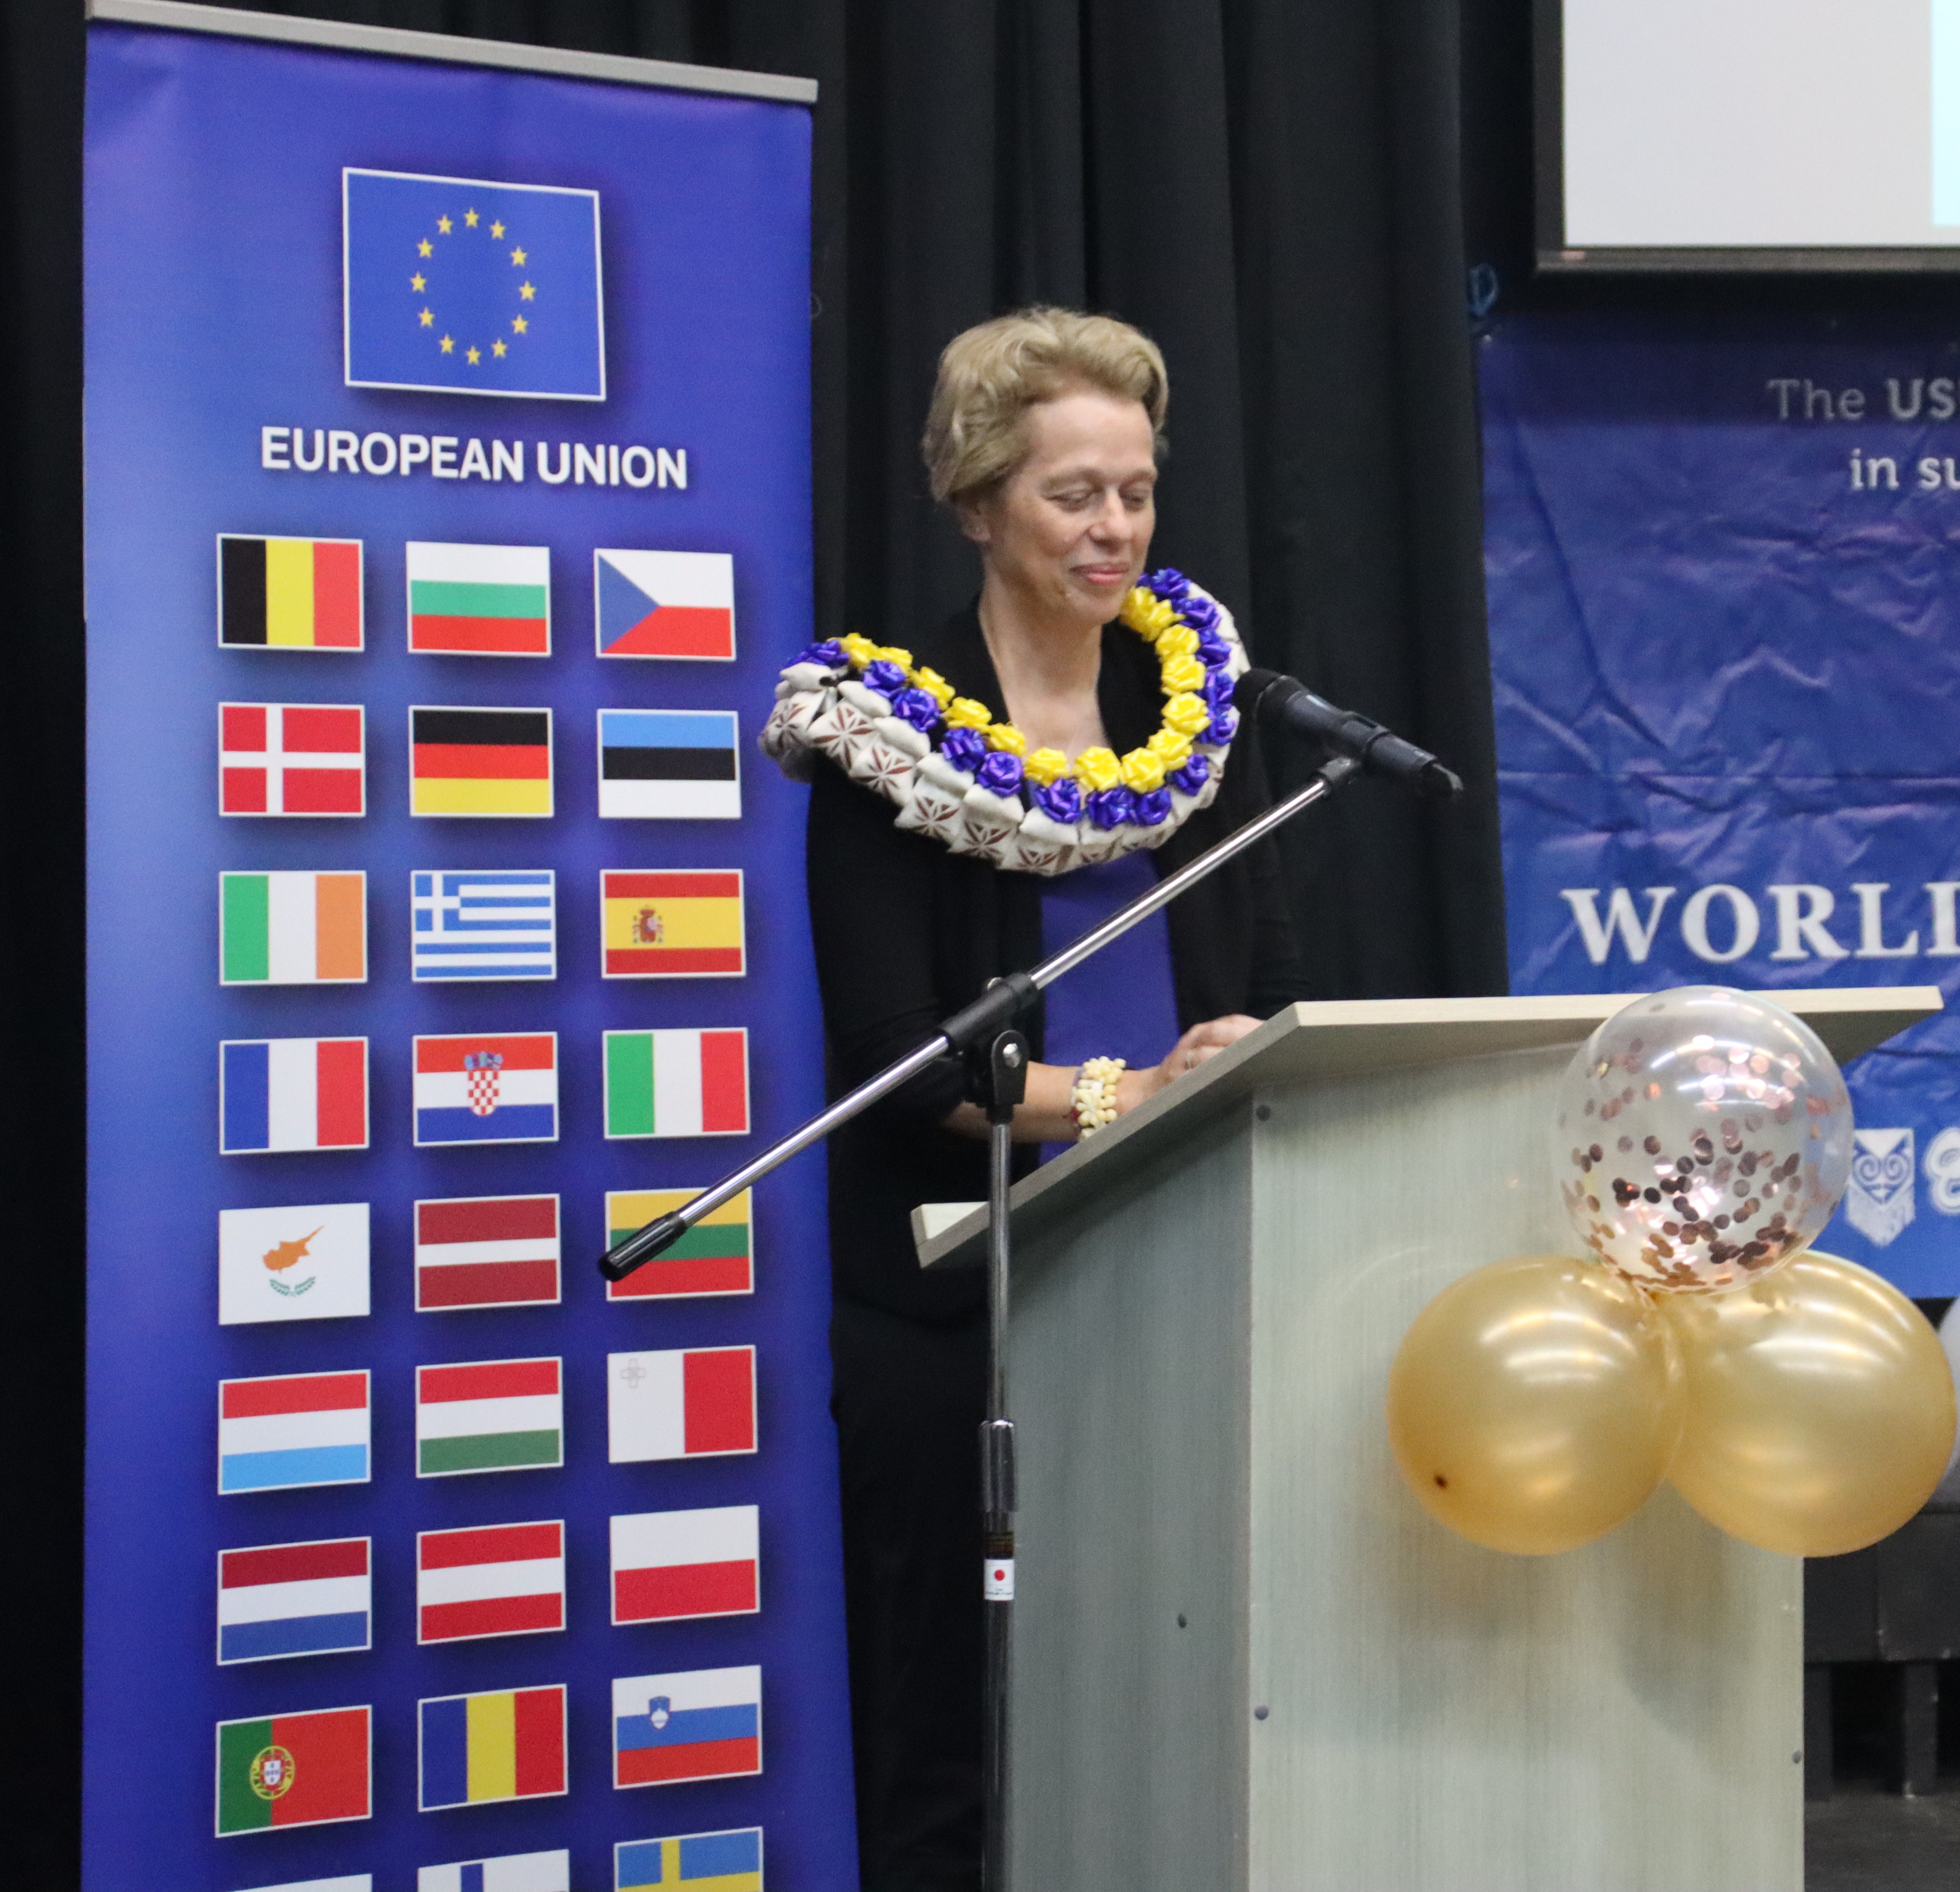 The European Union's Pacific Ambassador Barbara Plinkert